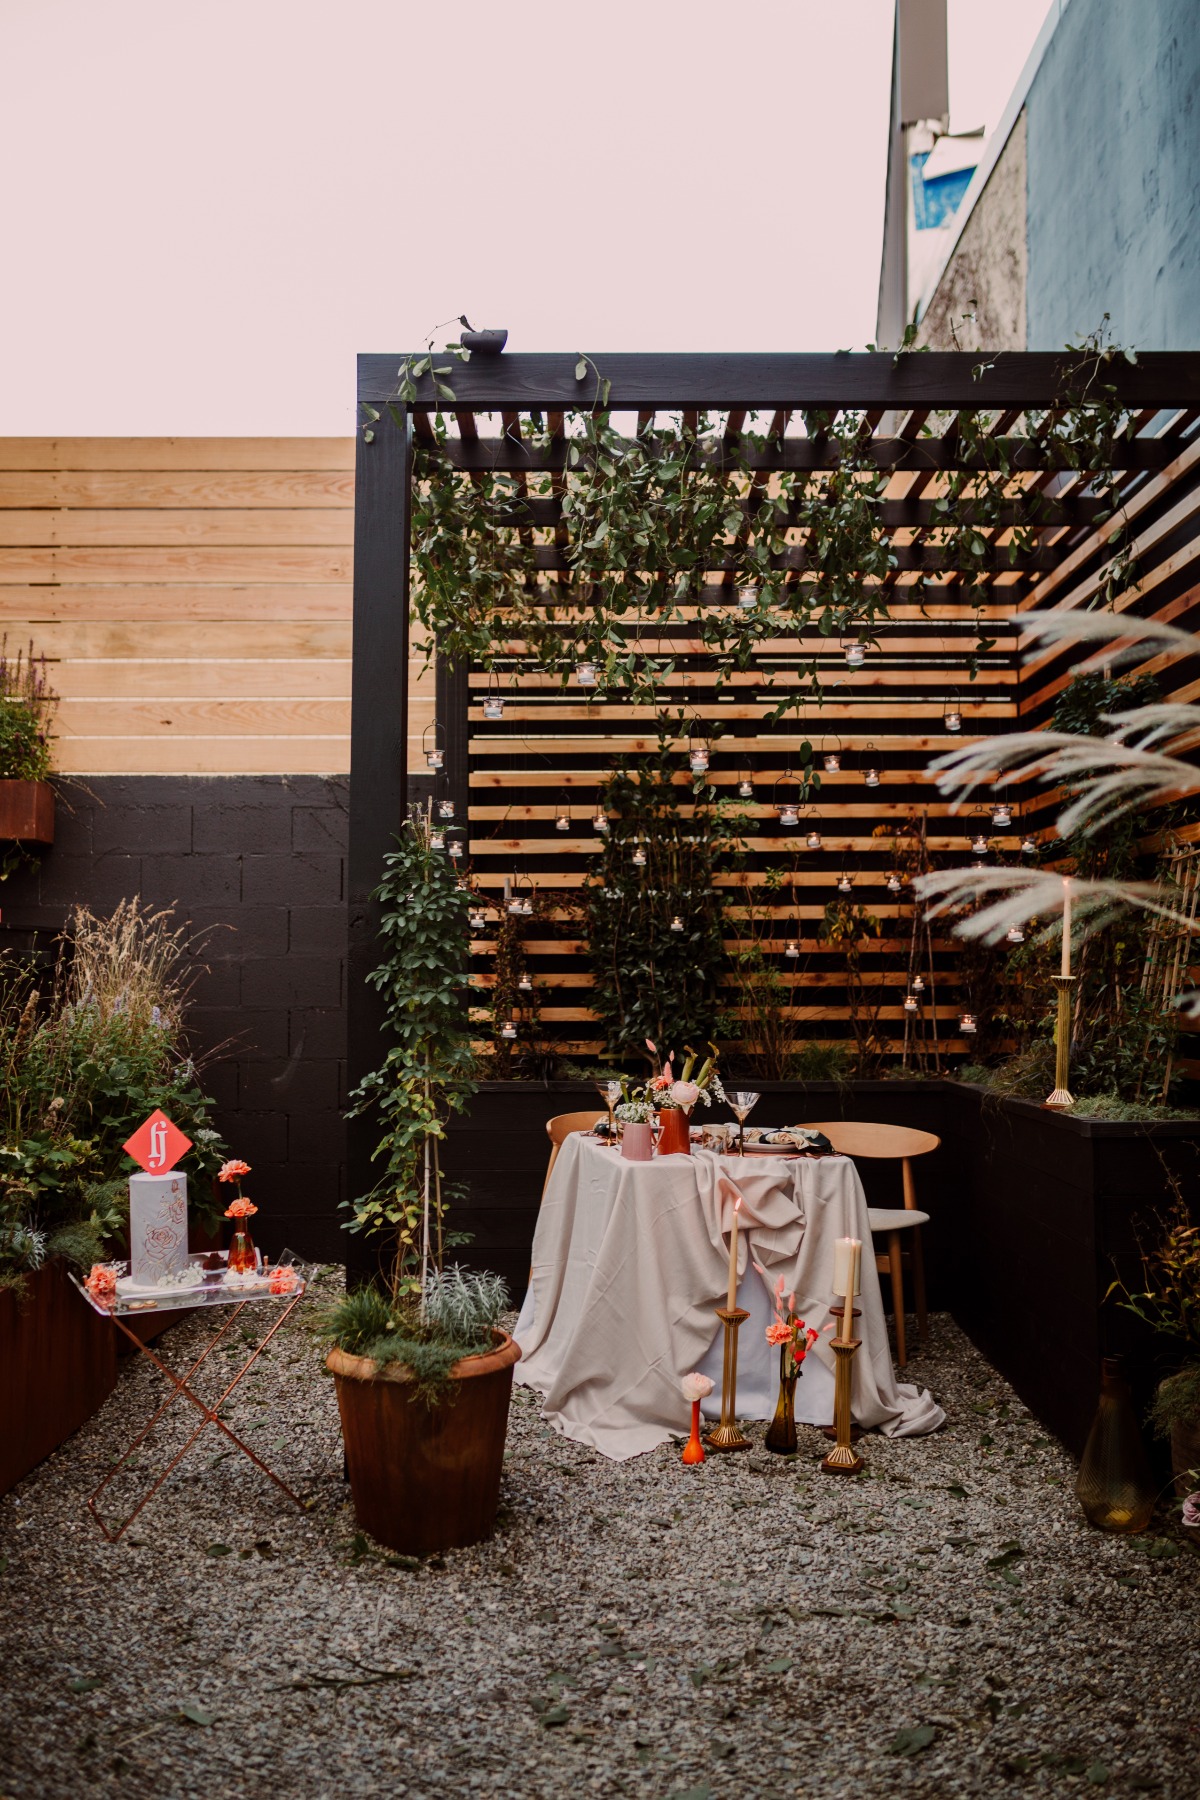 Backyard wedding design